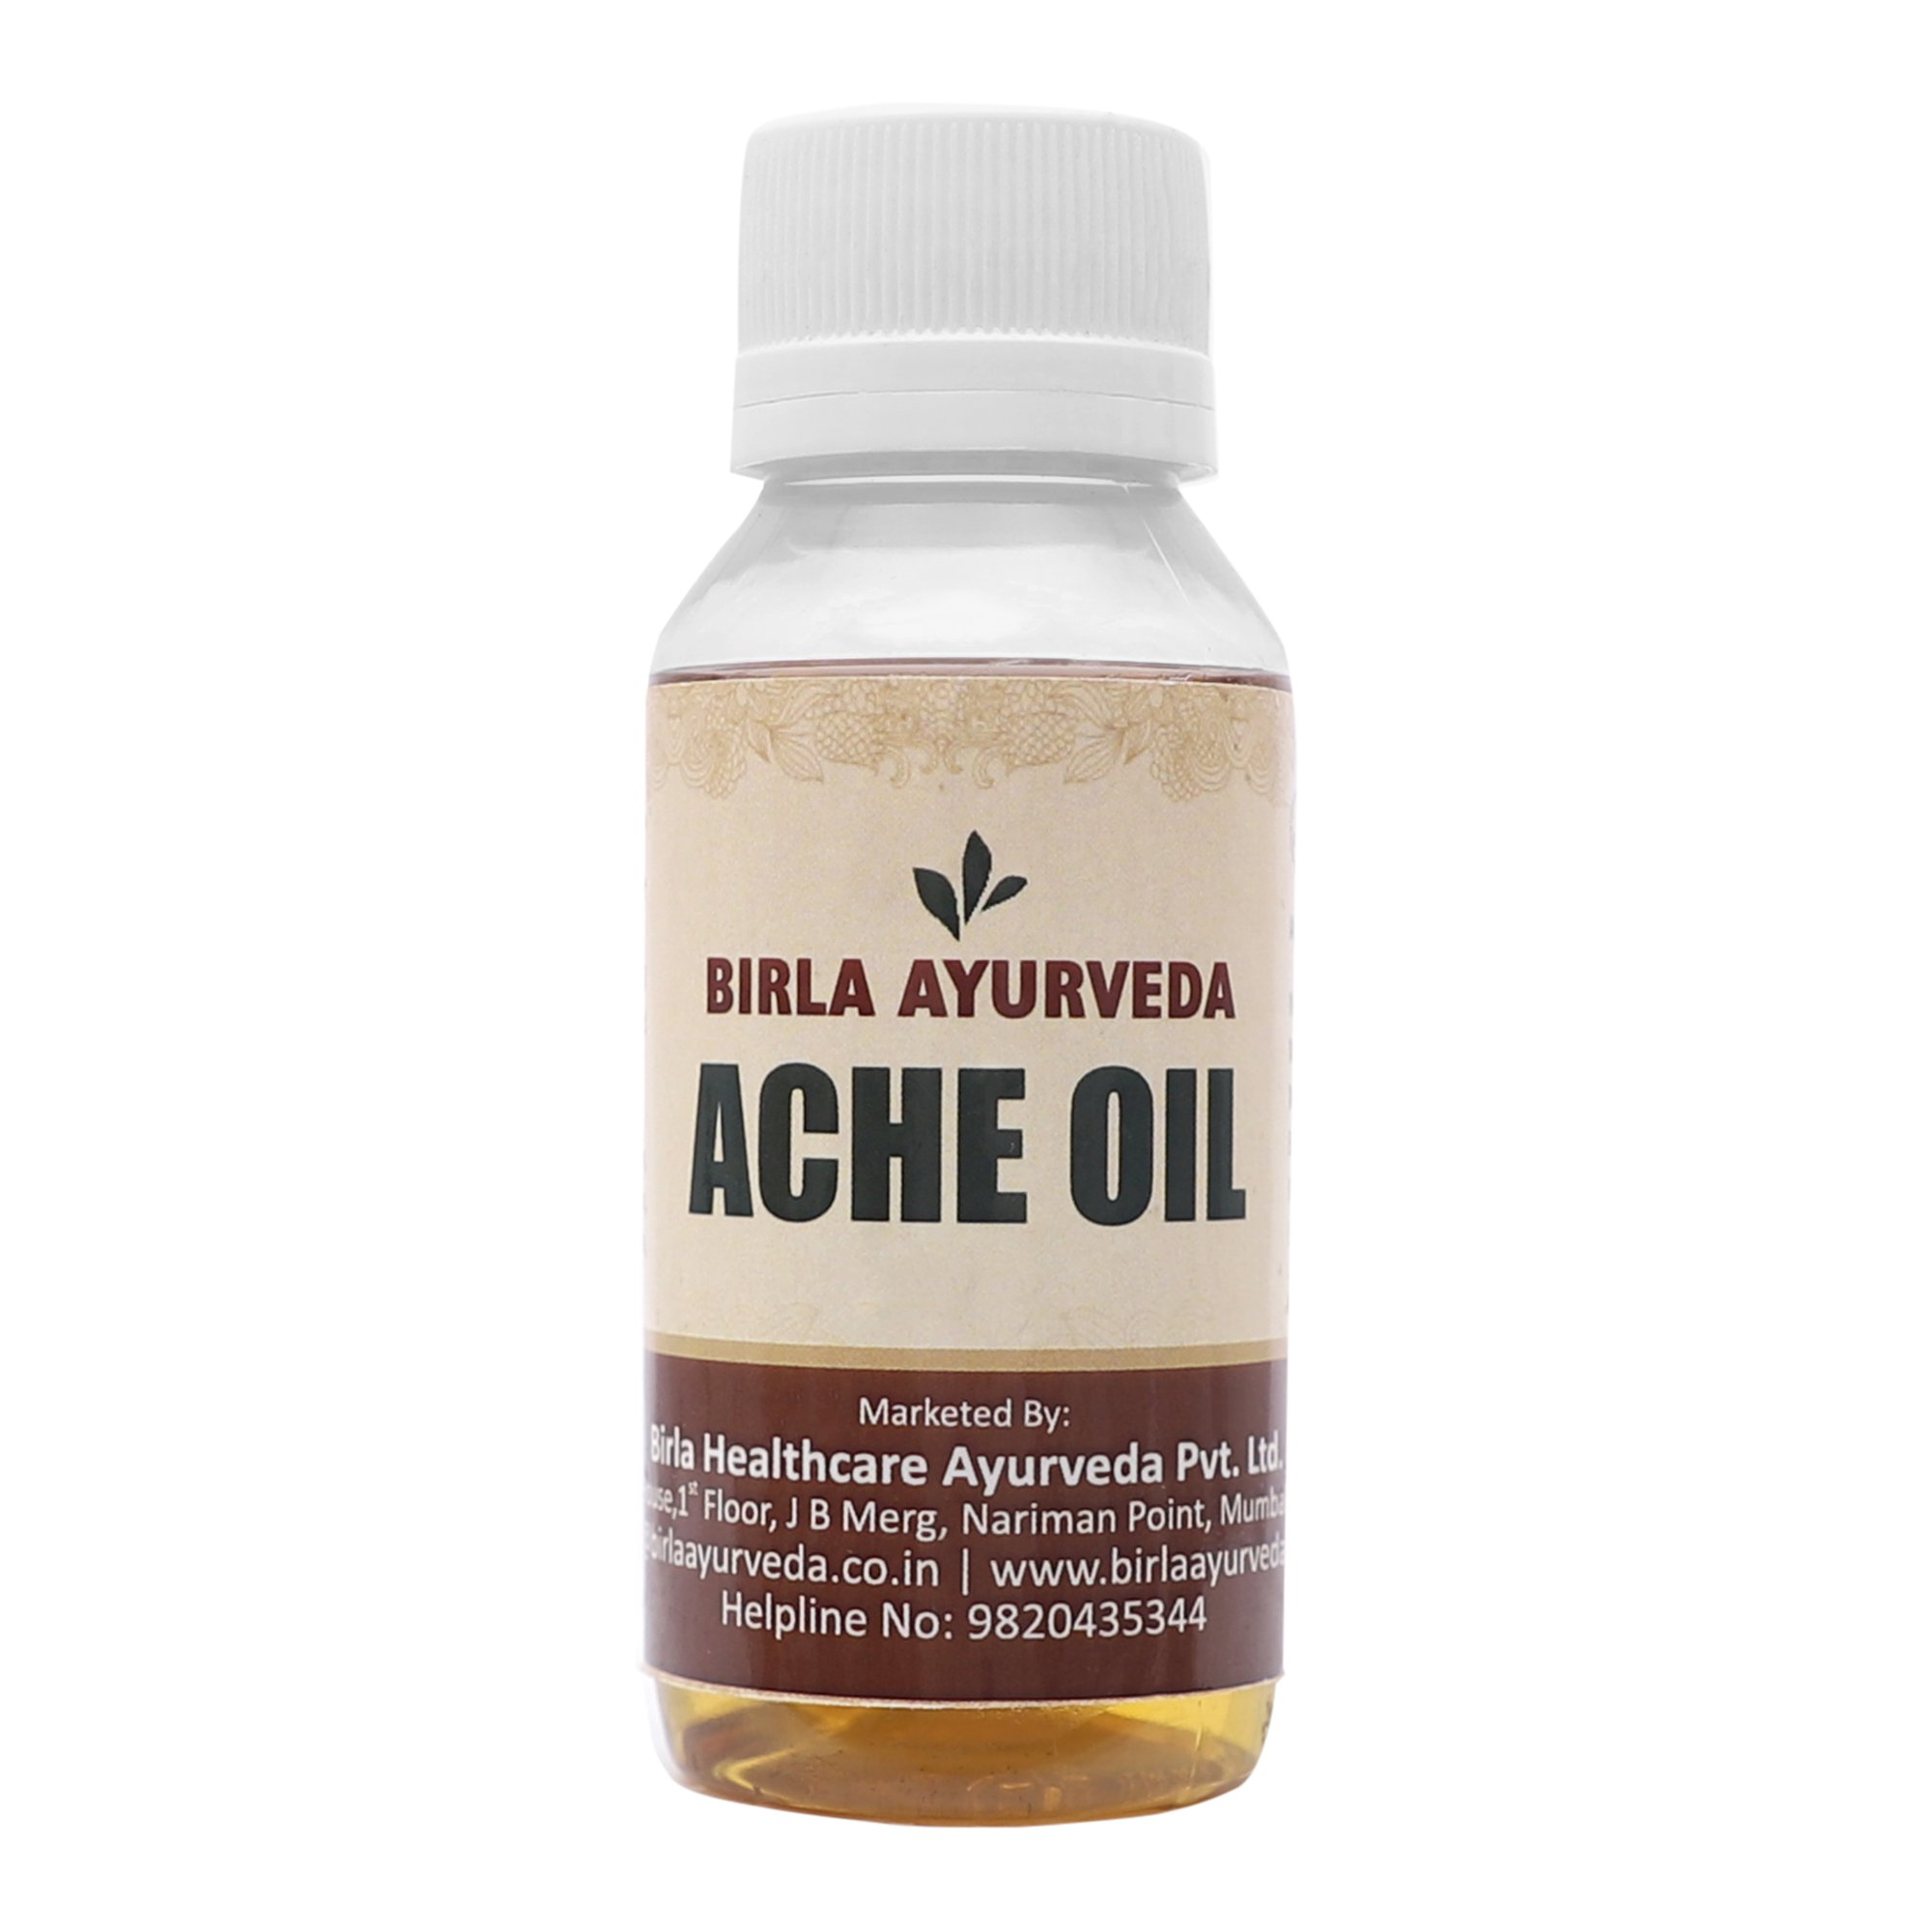 Birla Ayurveda Ache Oil